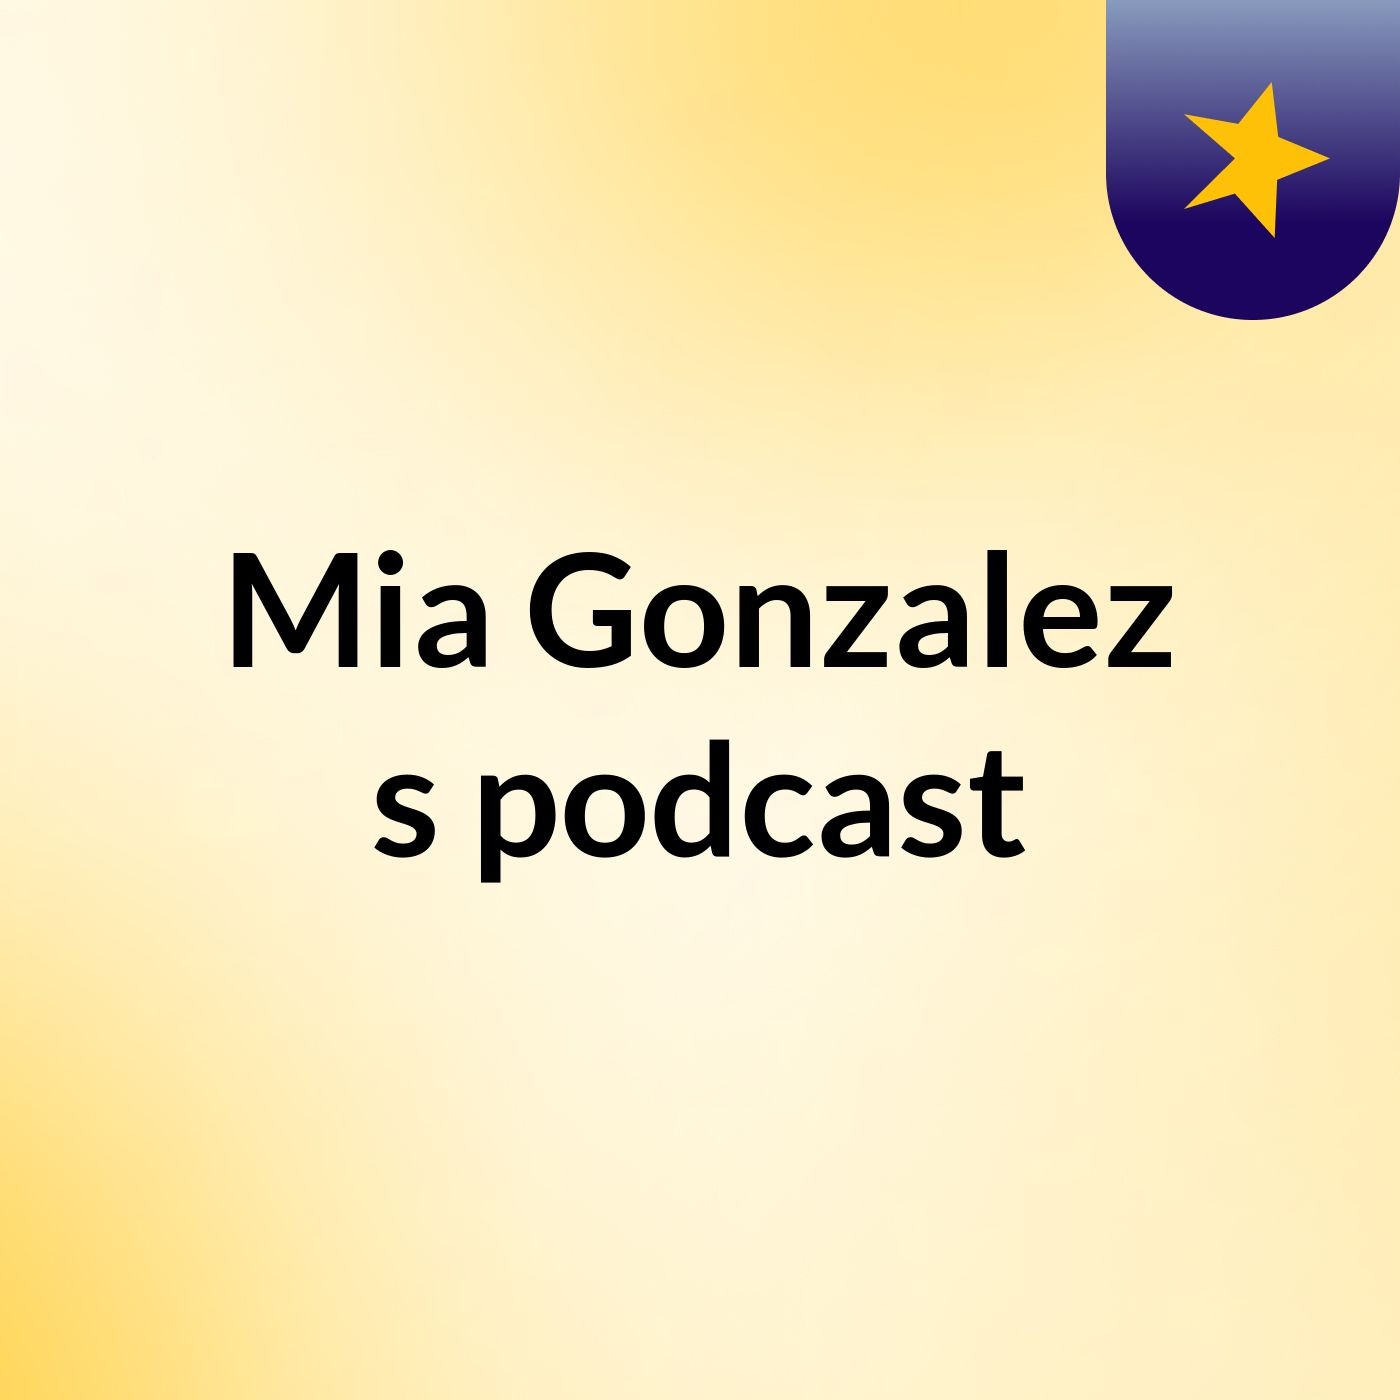 Episode 4 - Mia Gonzalez's podcast